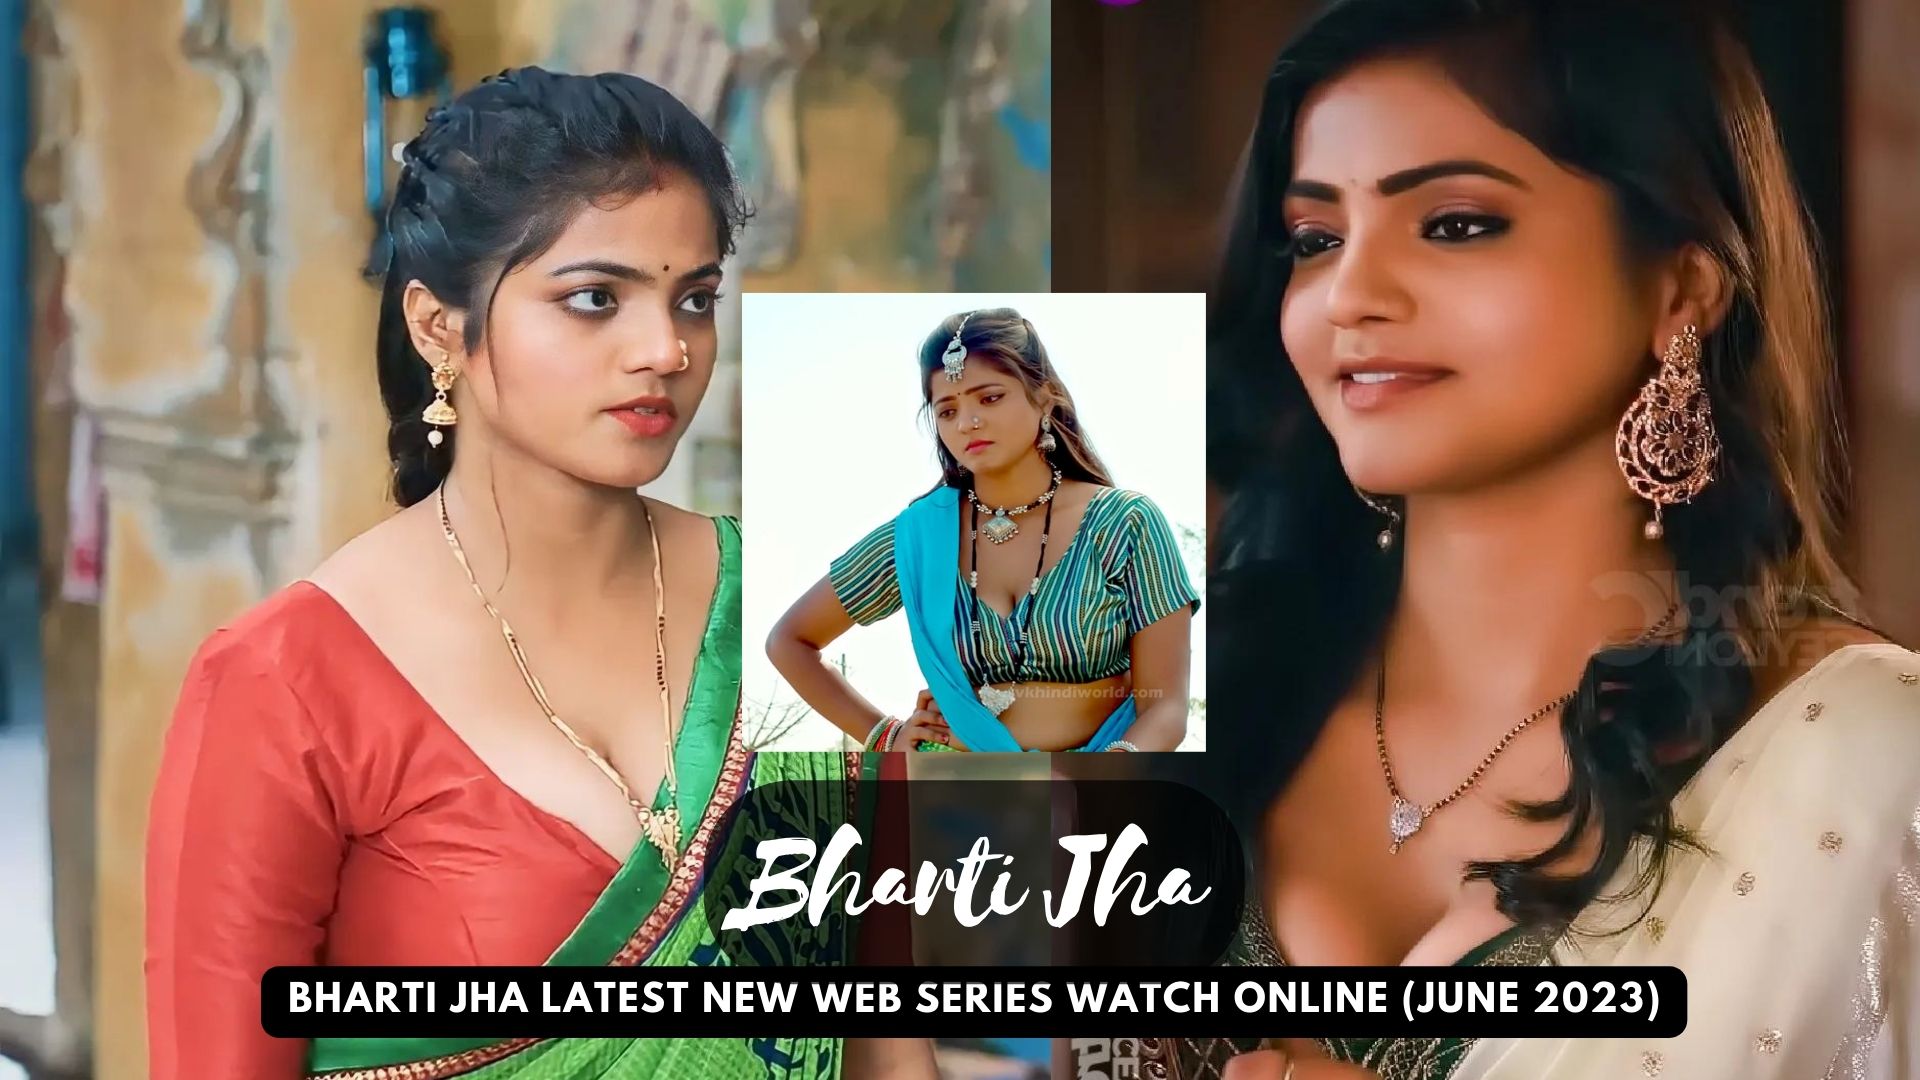 Bharti-Jha-All-Latest-New-Web-Series-Watch-Online-June-2023